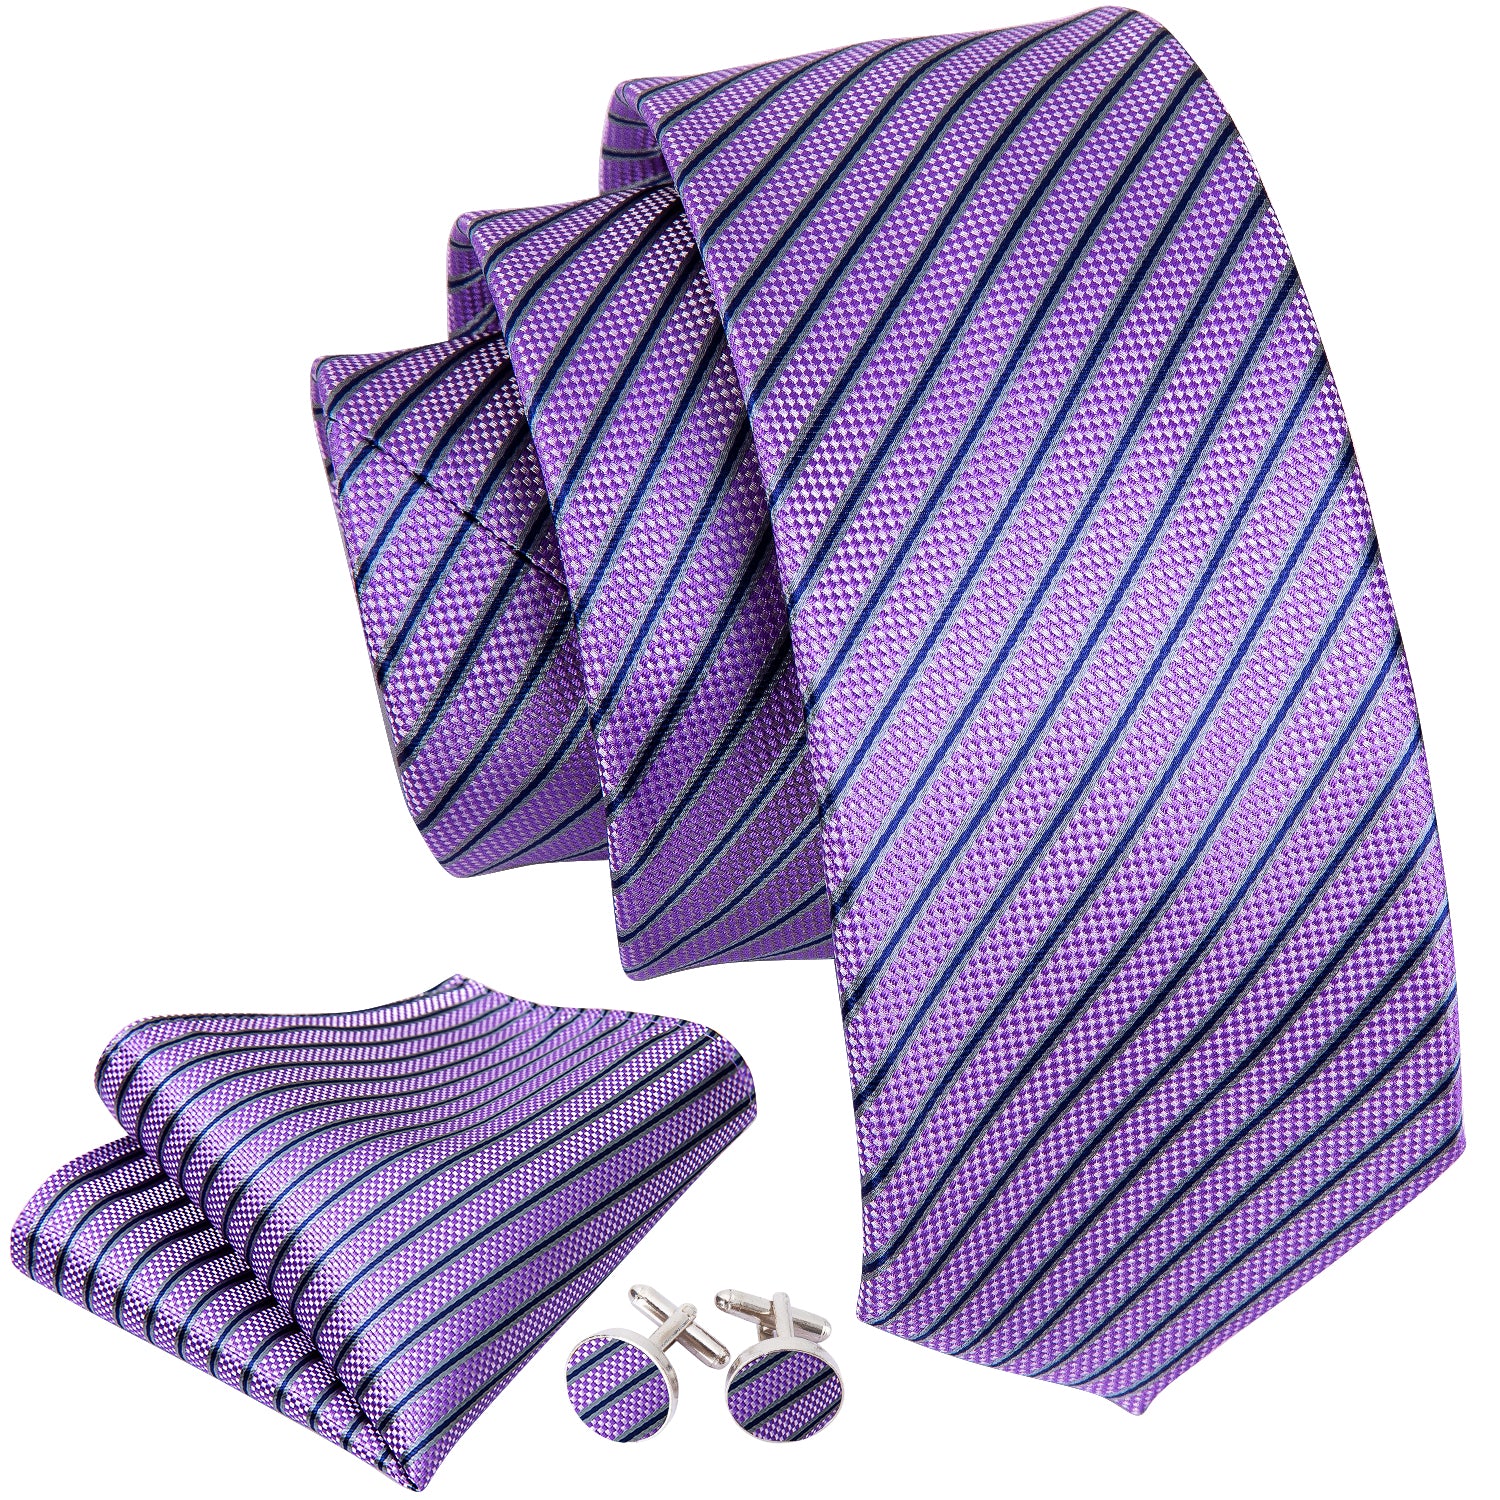 Purple Stripe Tie Pocket Square Cufflinks Set